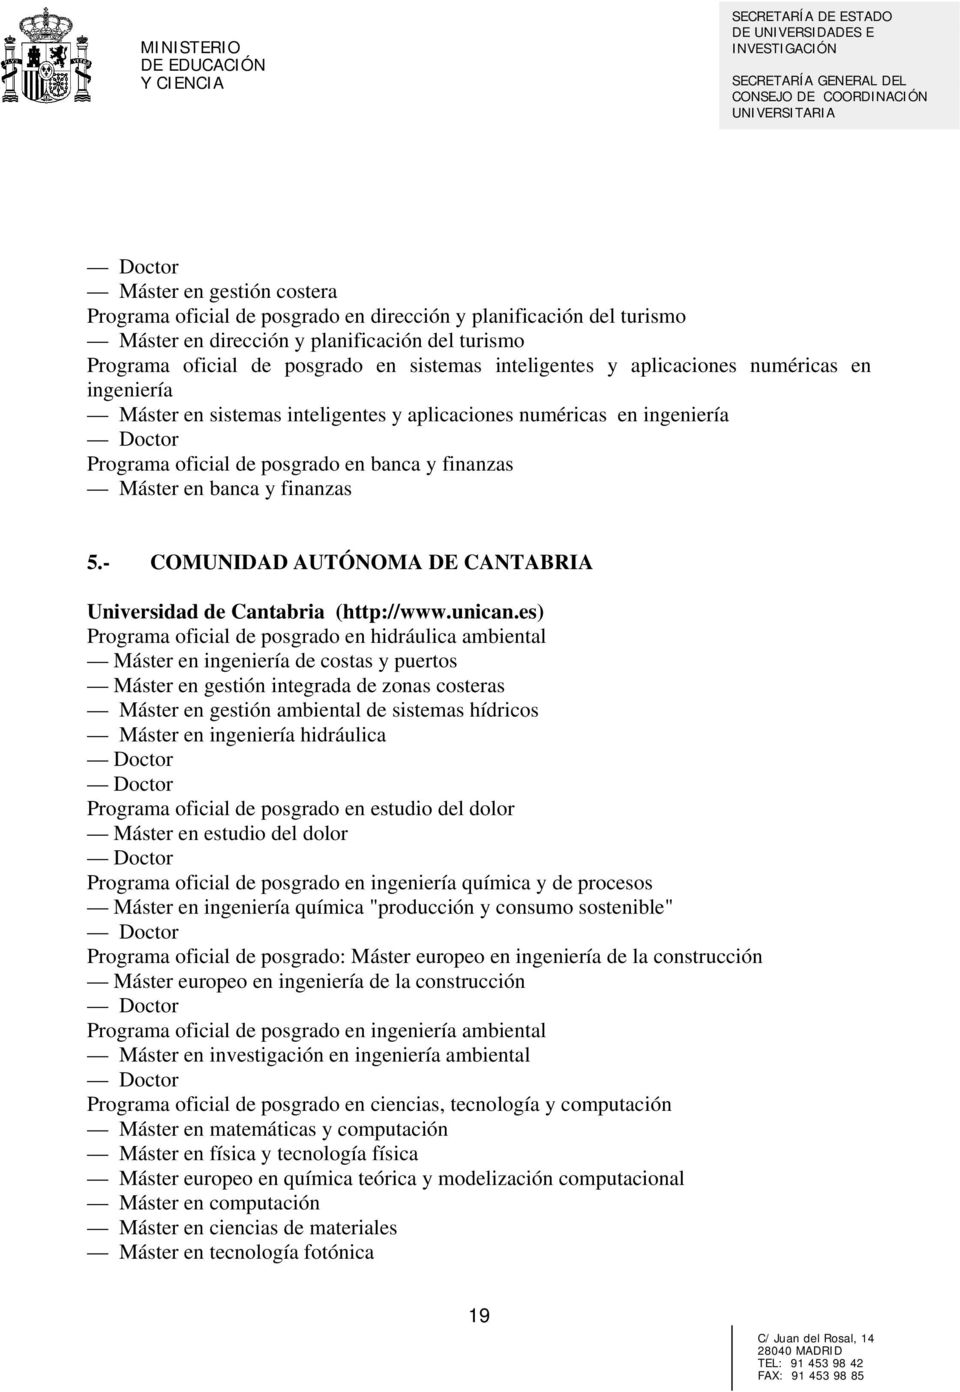 - COMUNIDAD AUTÓNOMA DE CANTABRIA Universidad de Cantabria (http://www.unican.